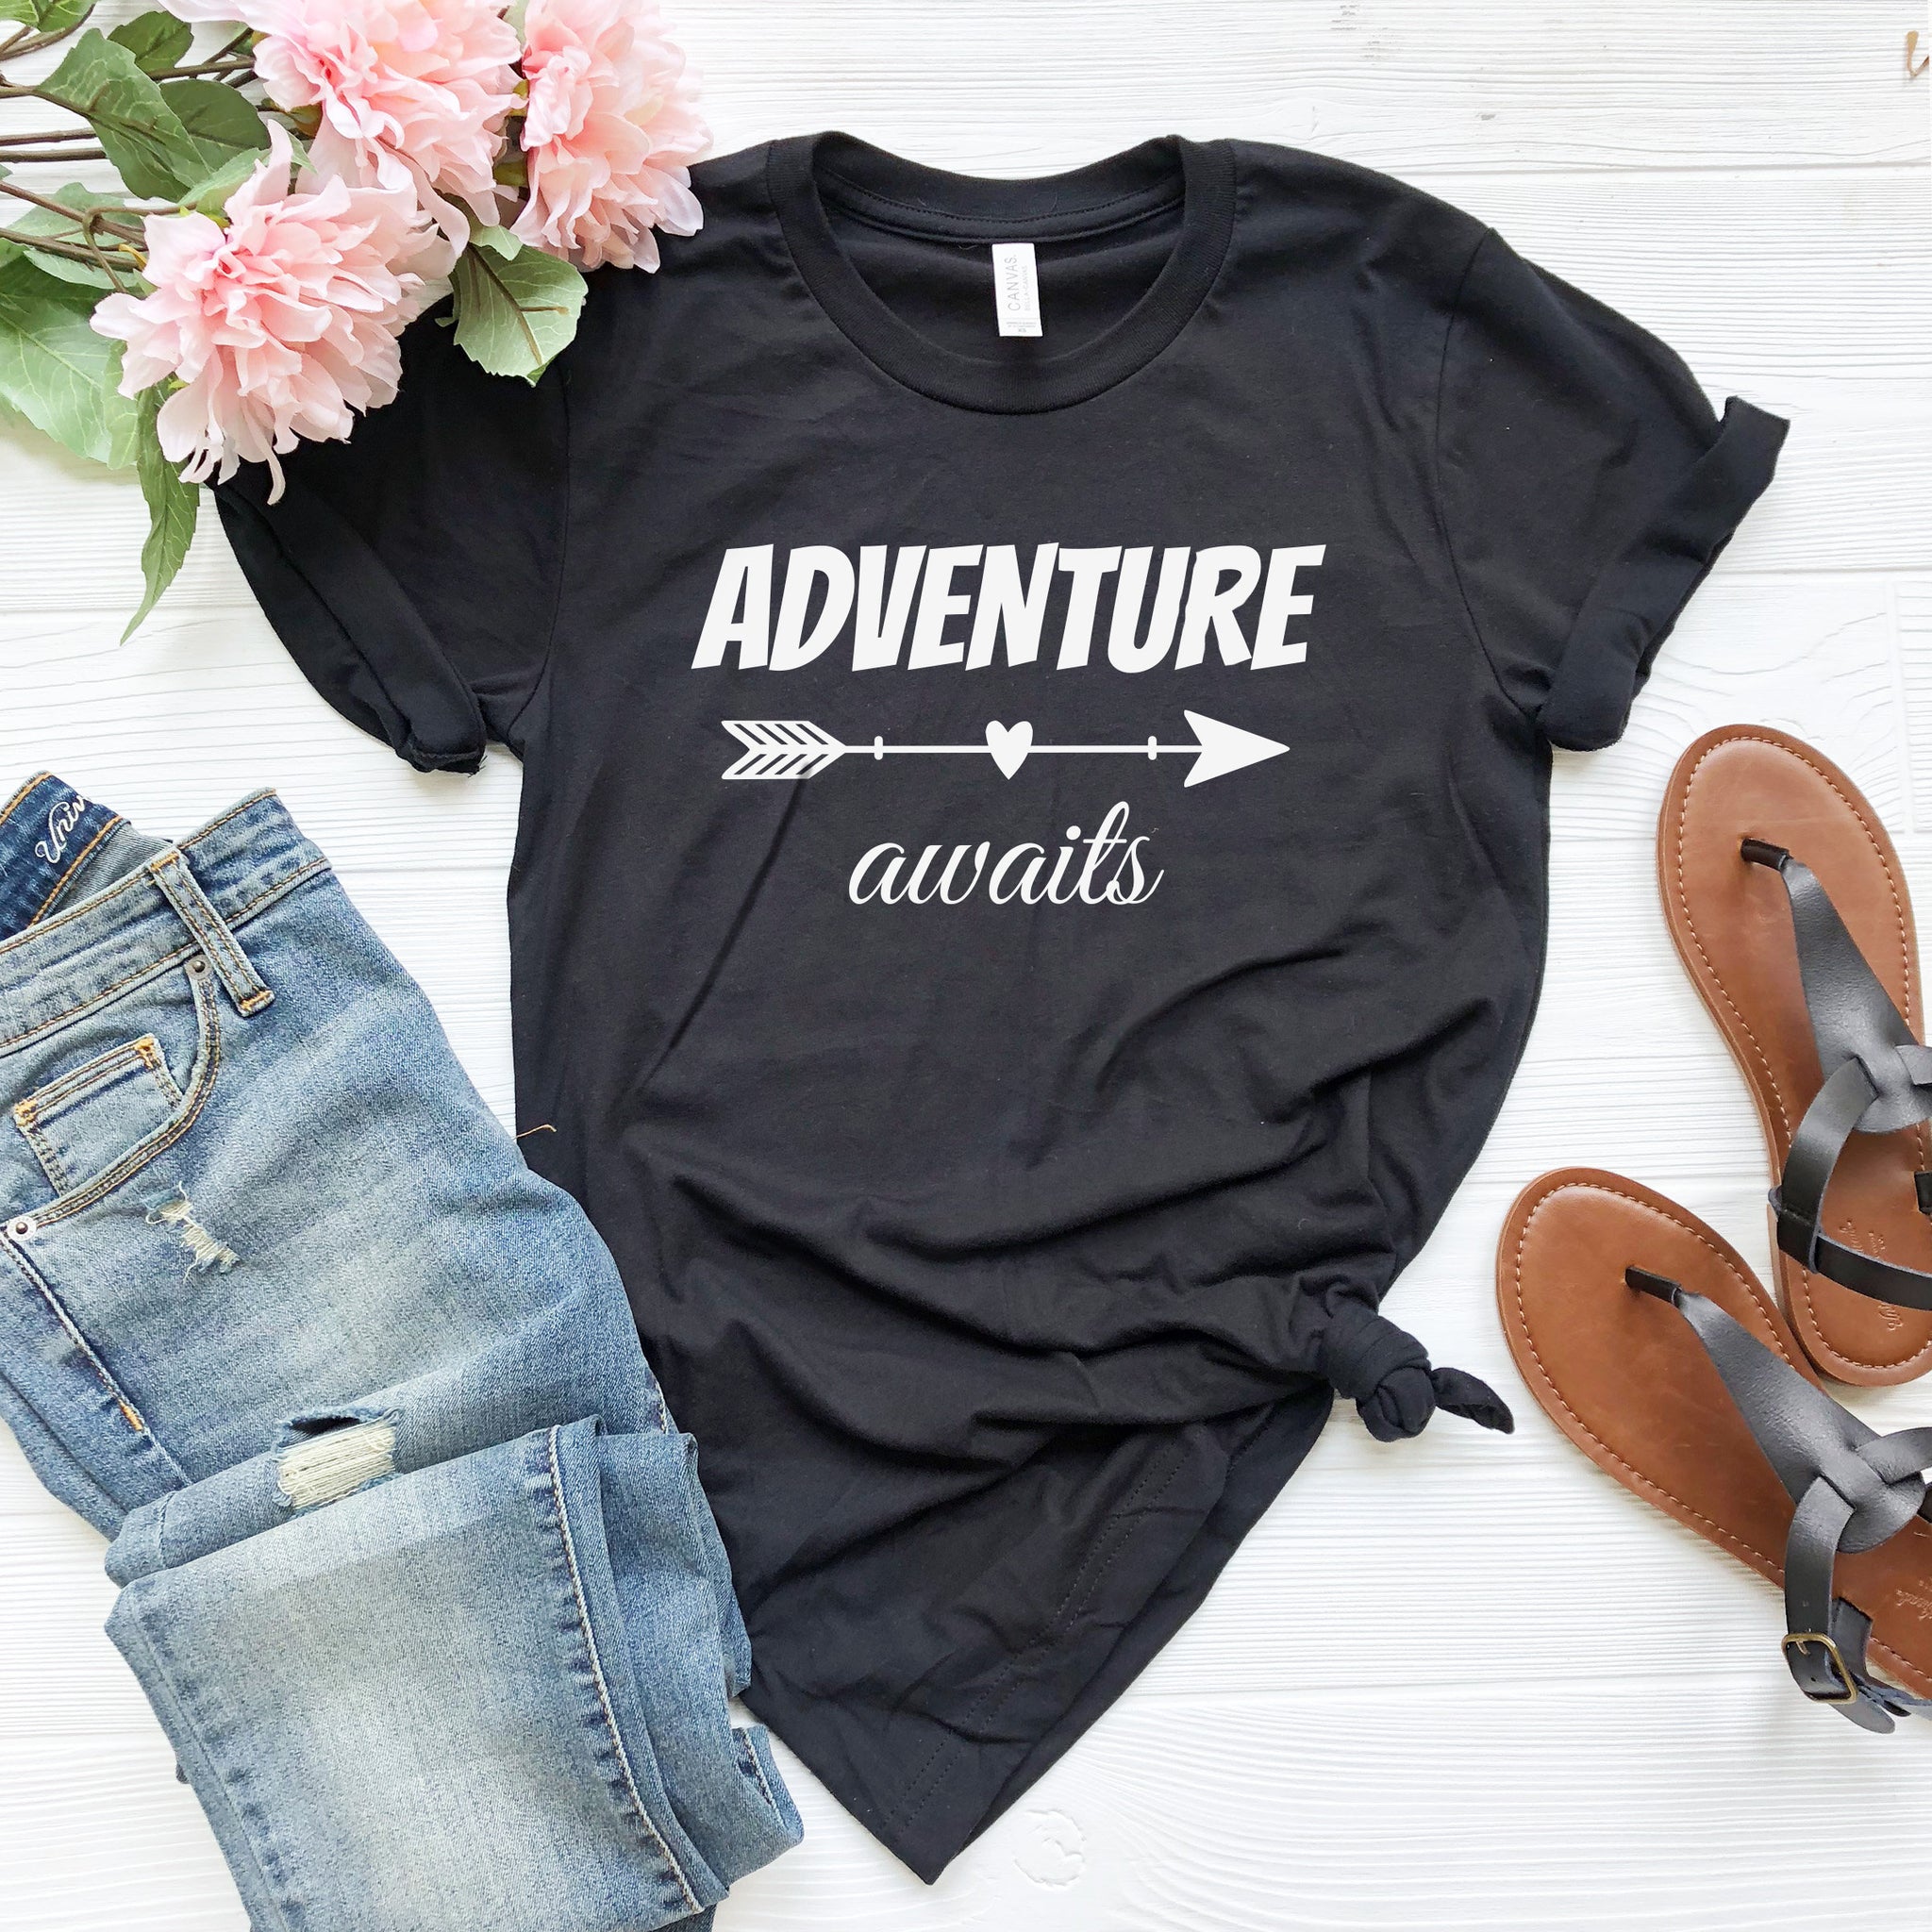 Mountain Shirt, Vacation Tshirt, Camping Shirt, Adventure Shirt, Climbing Shirt, Hiking Shirt, Travel Shirt, Camper Shirt, Outdoor Shirt,m80 - Fastdeliverytees.com